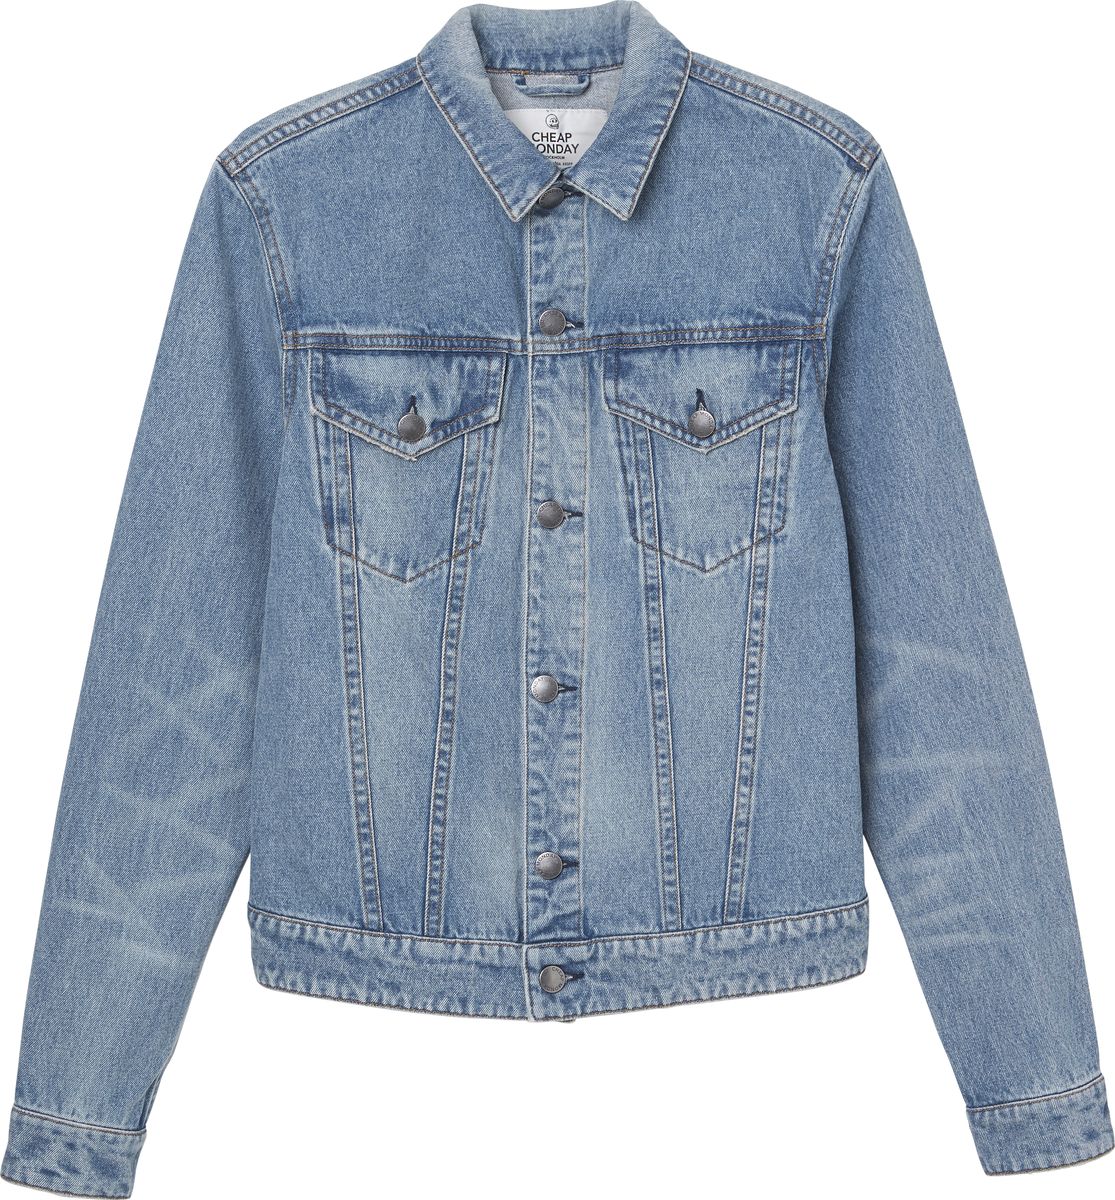 Куртка мужская Cheap Monday, цвет: синий. 0505857. Размер M (48)